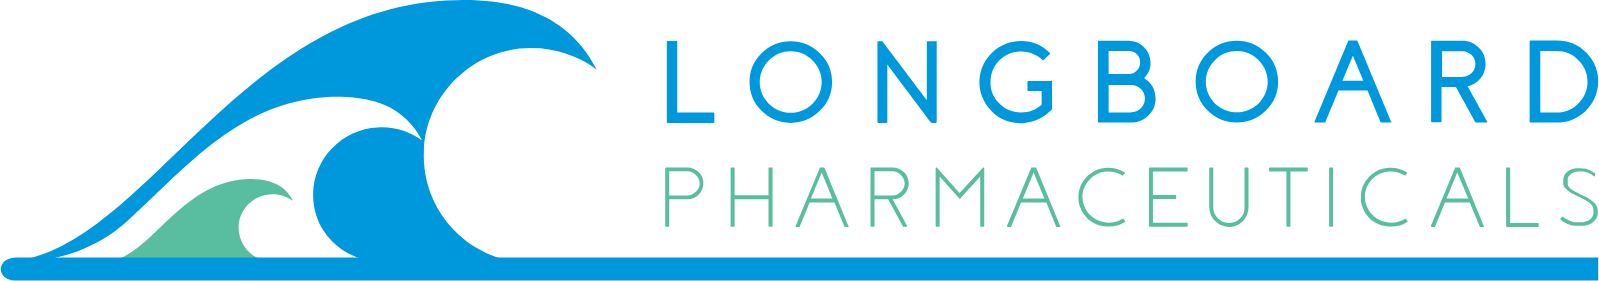 Longboard Pharmaceuticals logo large (transparent PNG)